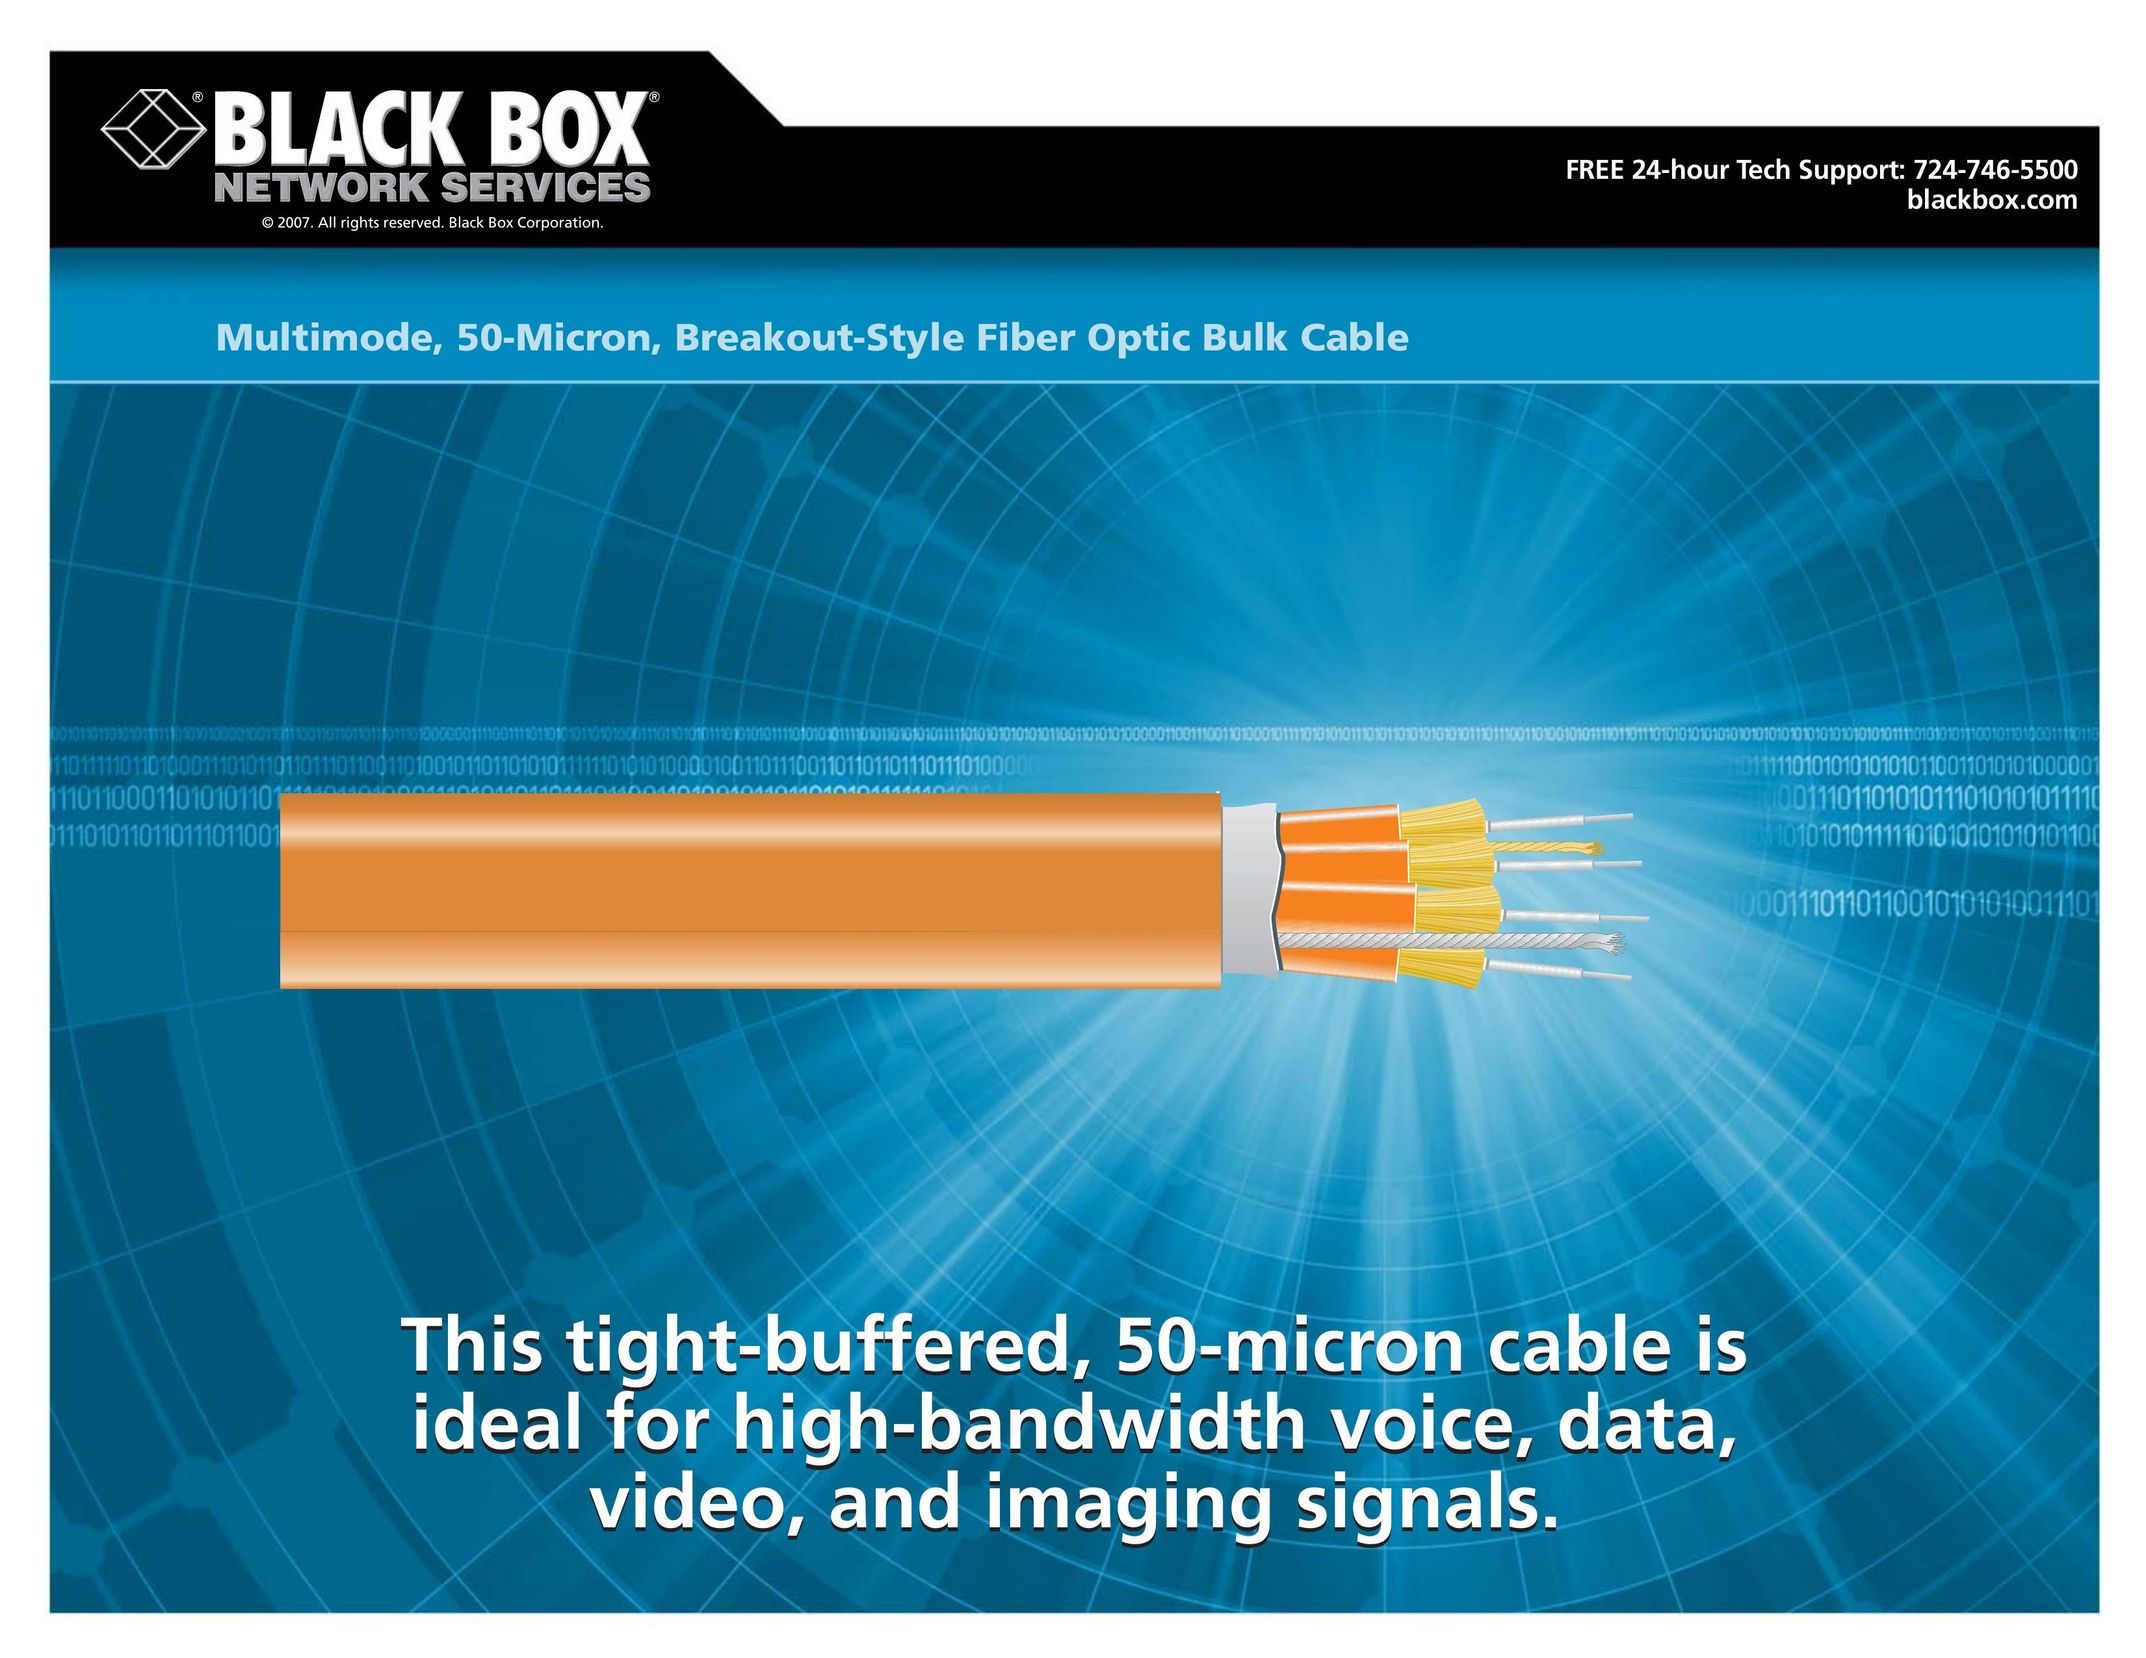 Black Box Fiber Optic Bulk Cable Network Router User Manual